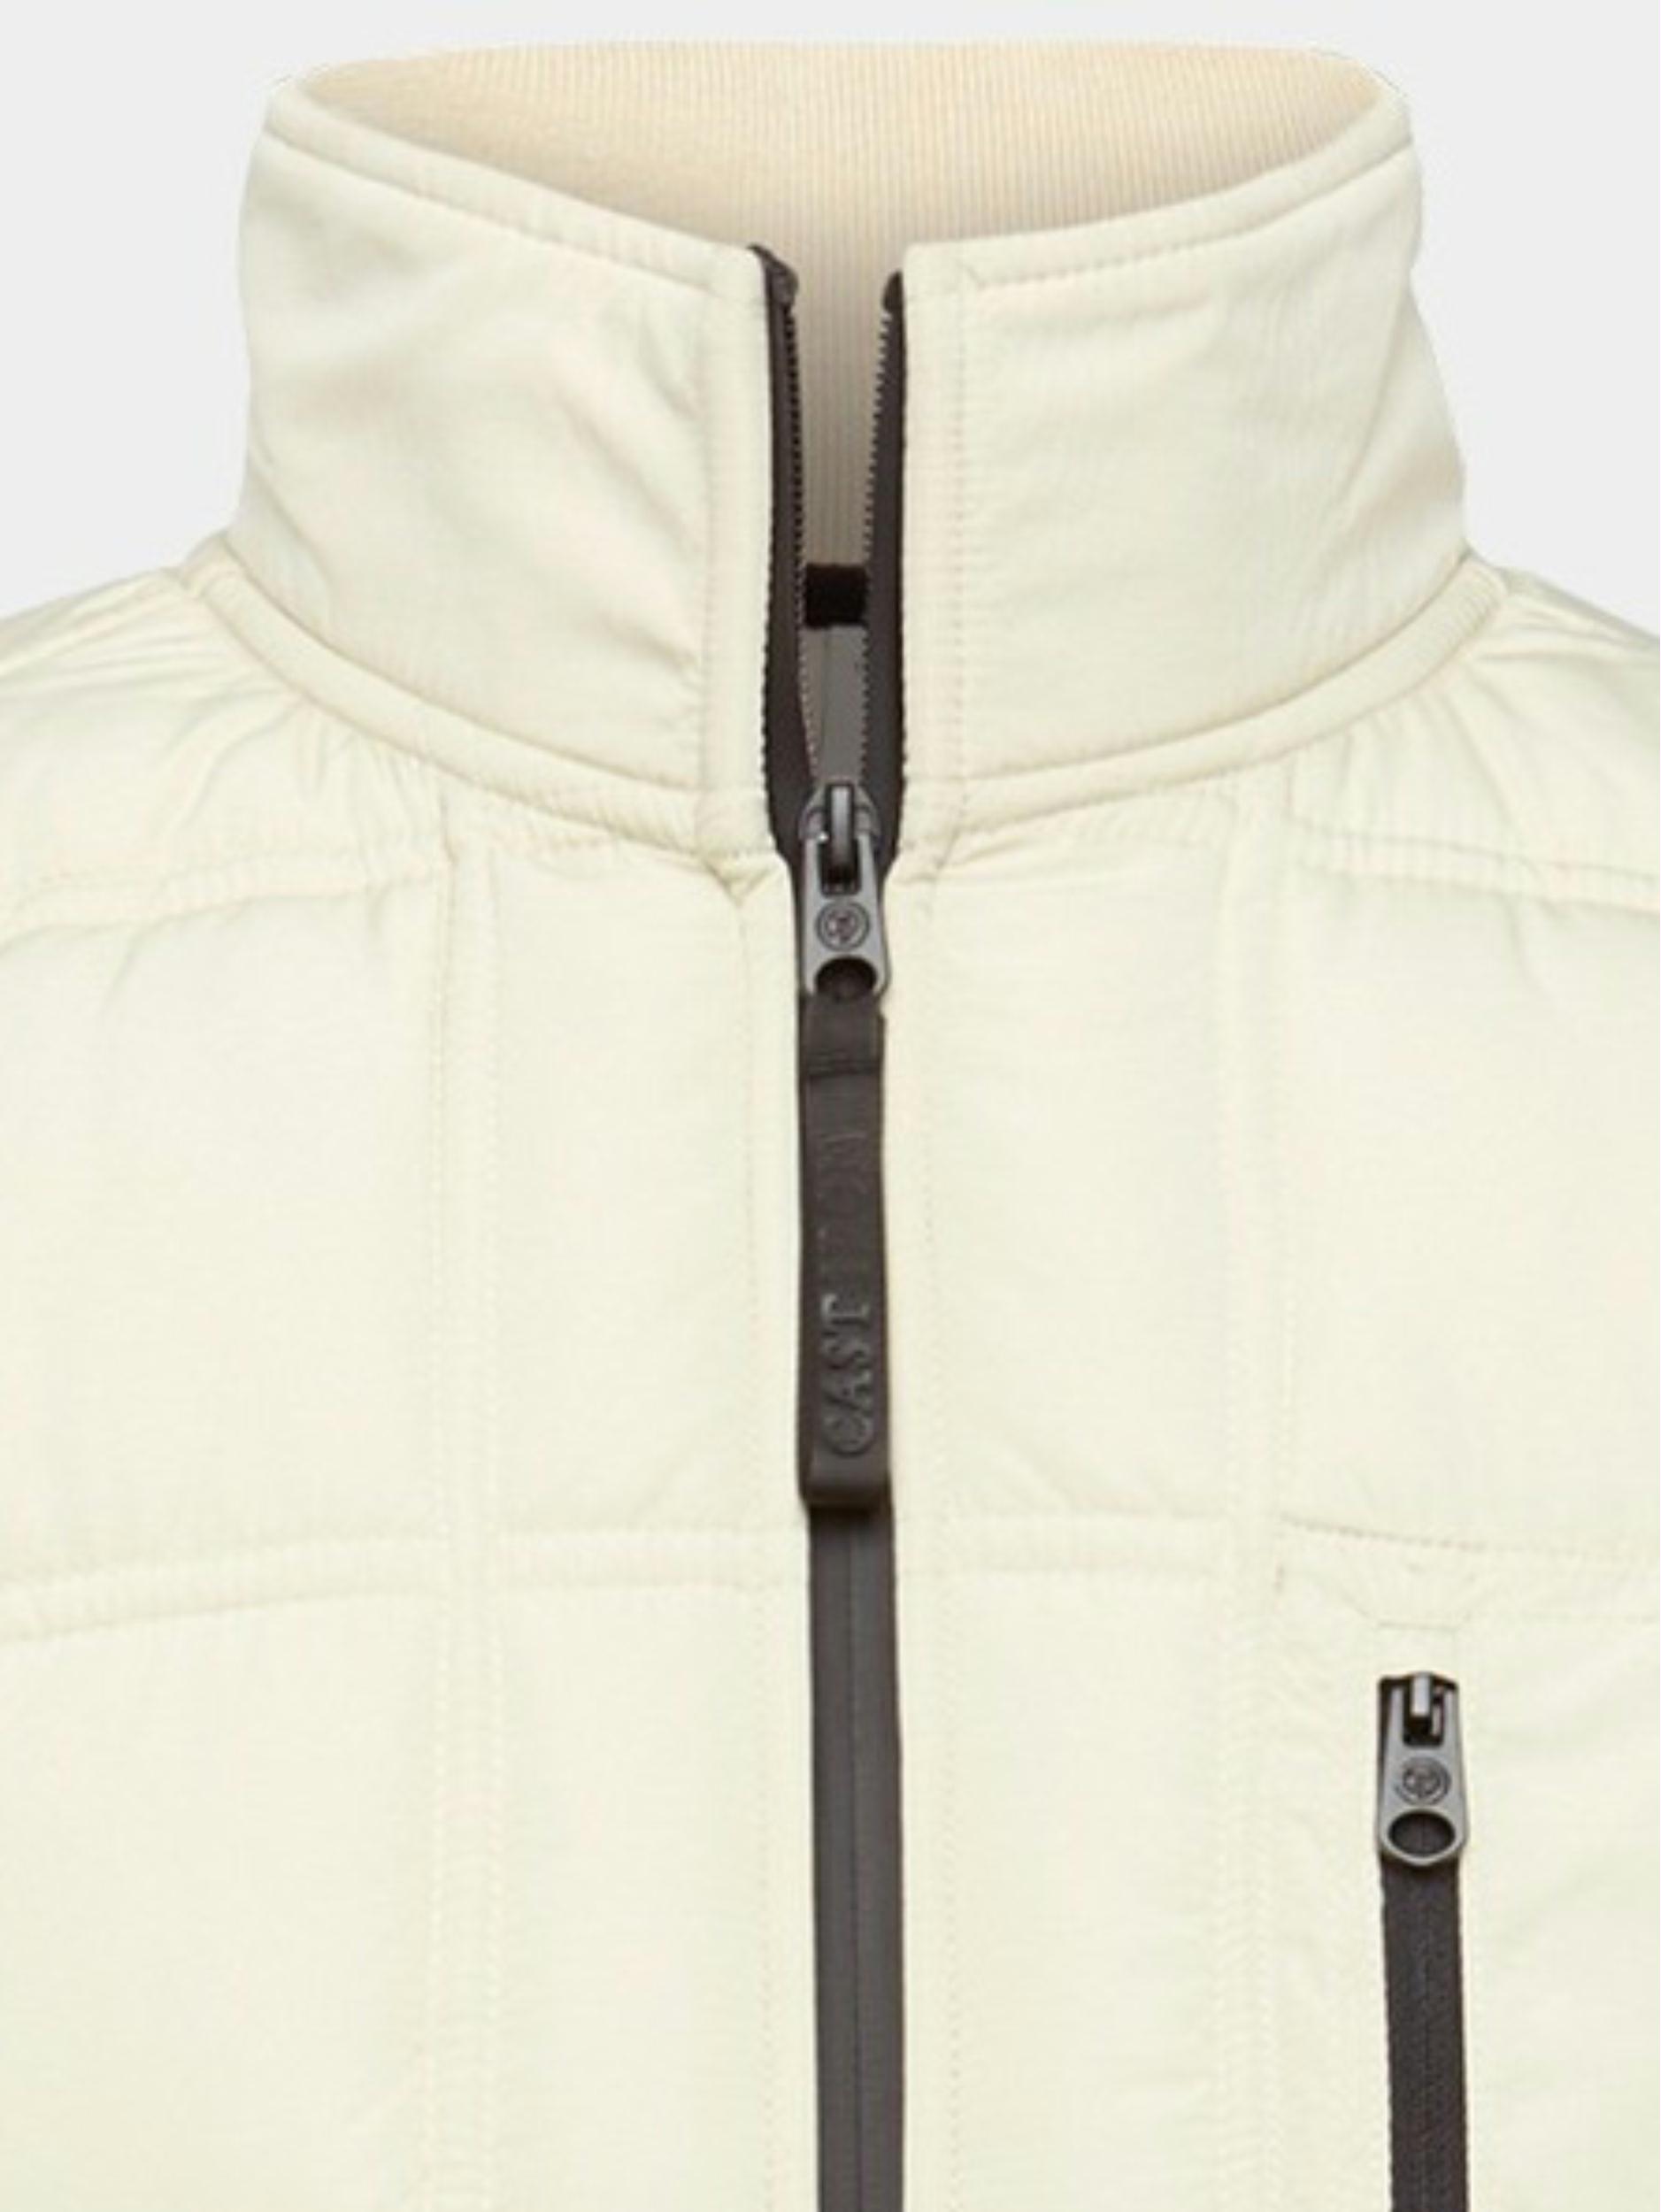 Cast Iron Zomerjack Wit Bomber jacket cotton polar fl CSW2302410/8004